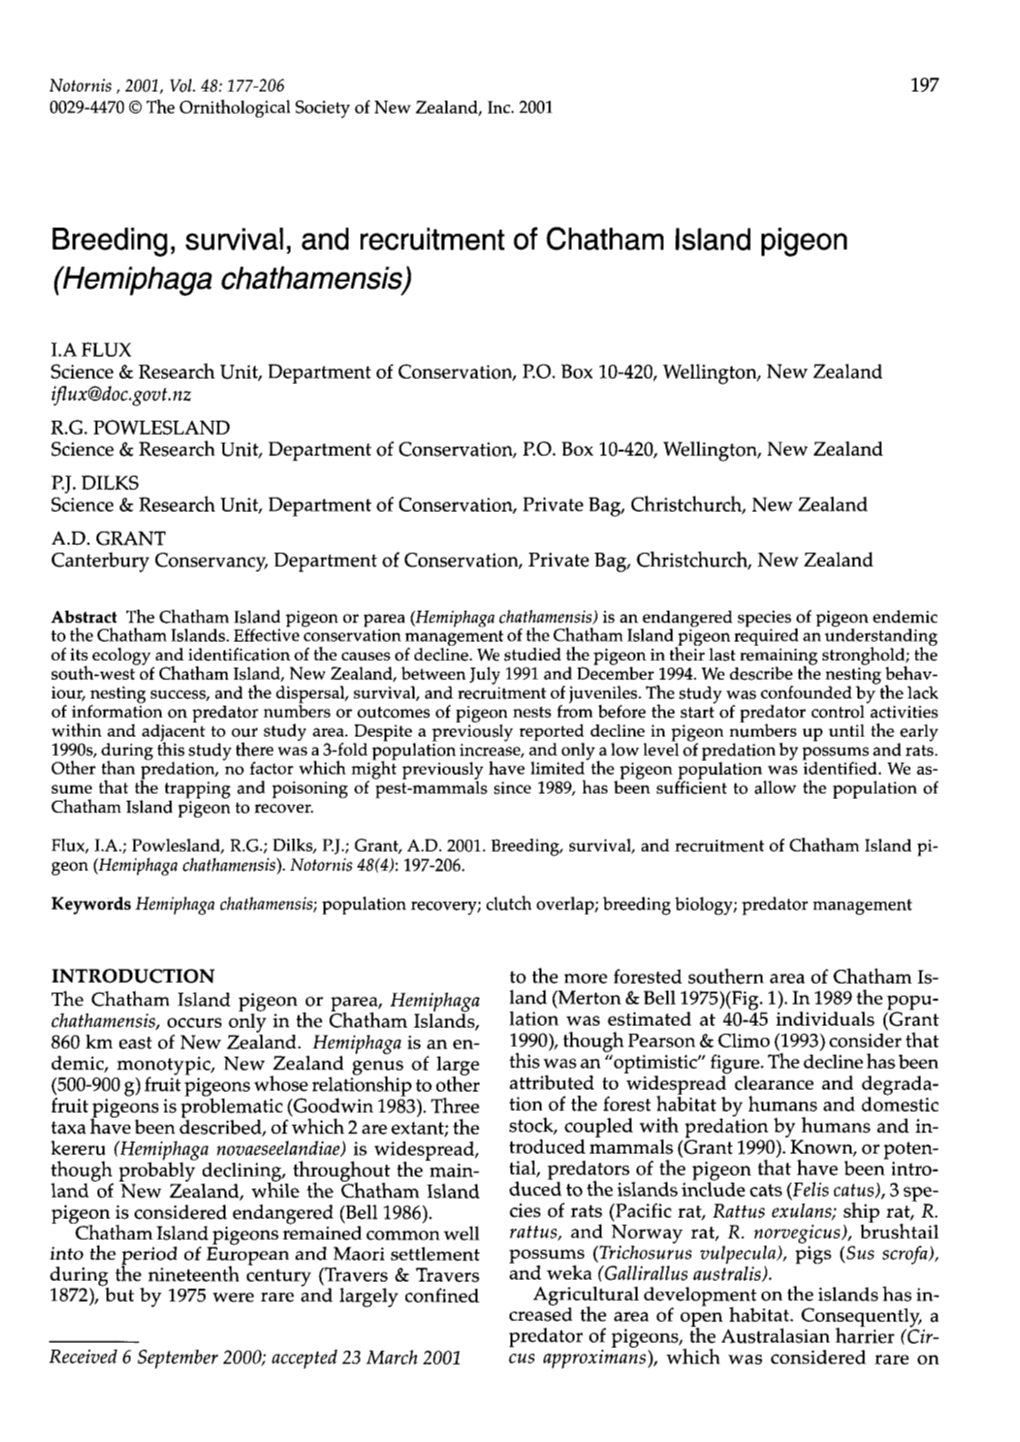 Breeding, Survival, and Recruitment of Chatham Island Pigeon (Hemiphaga Chathamensis)